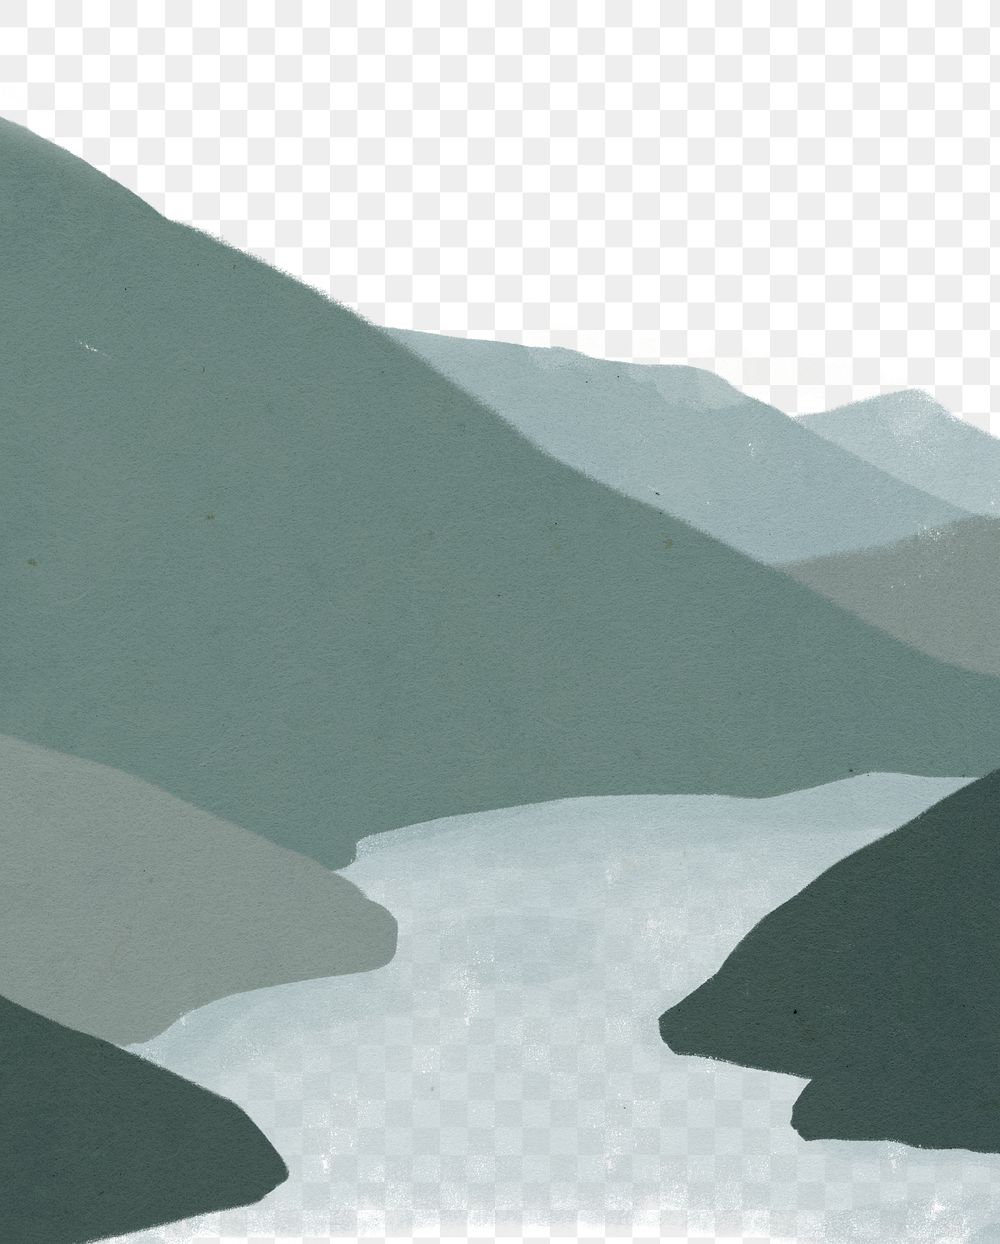 Mountain lake png border, transparent background